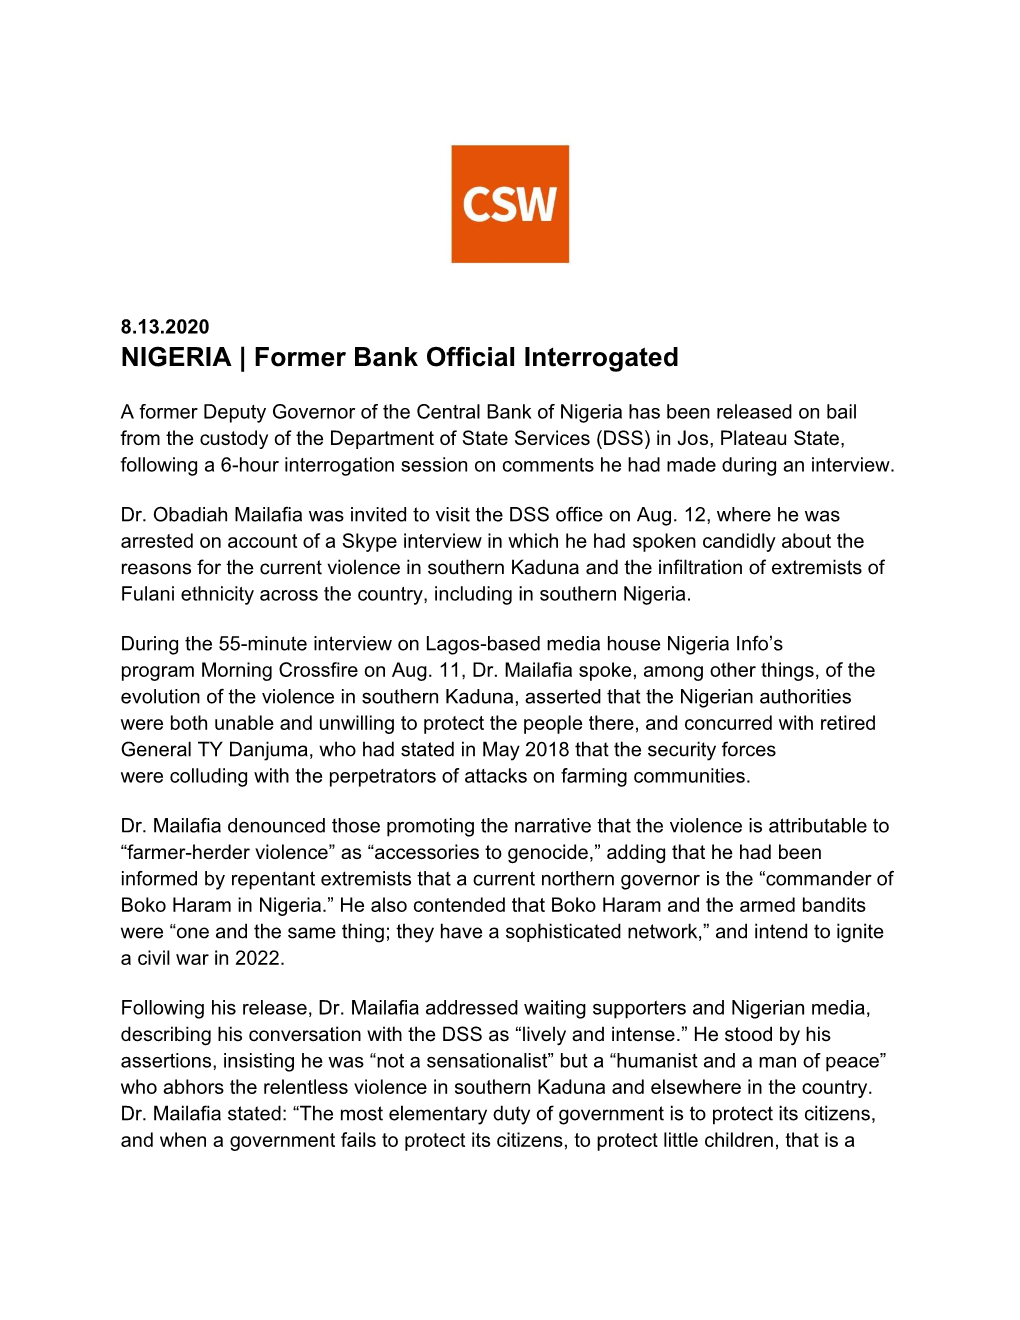 NIGERIA | Former Bank Official Interrogated